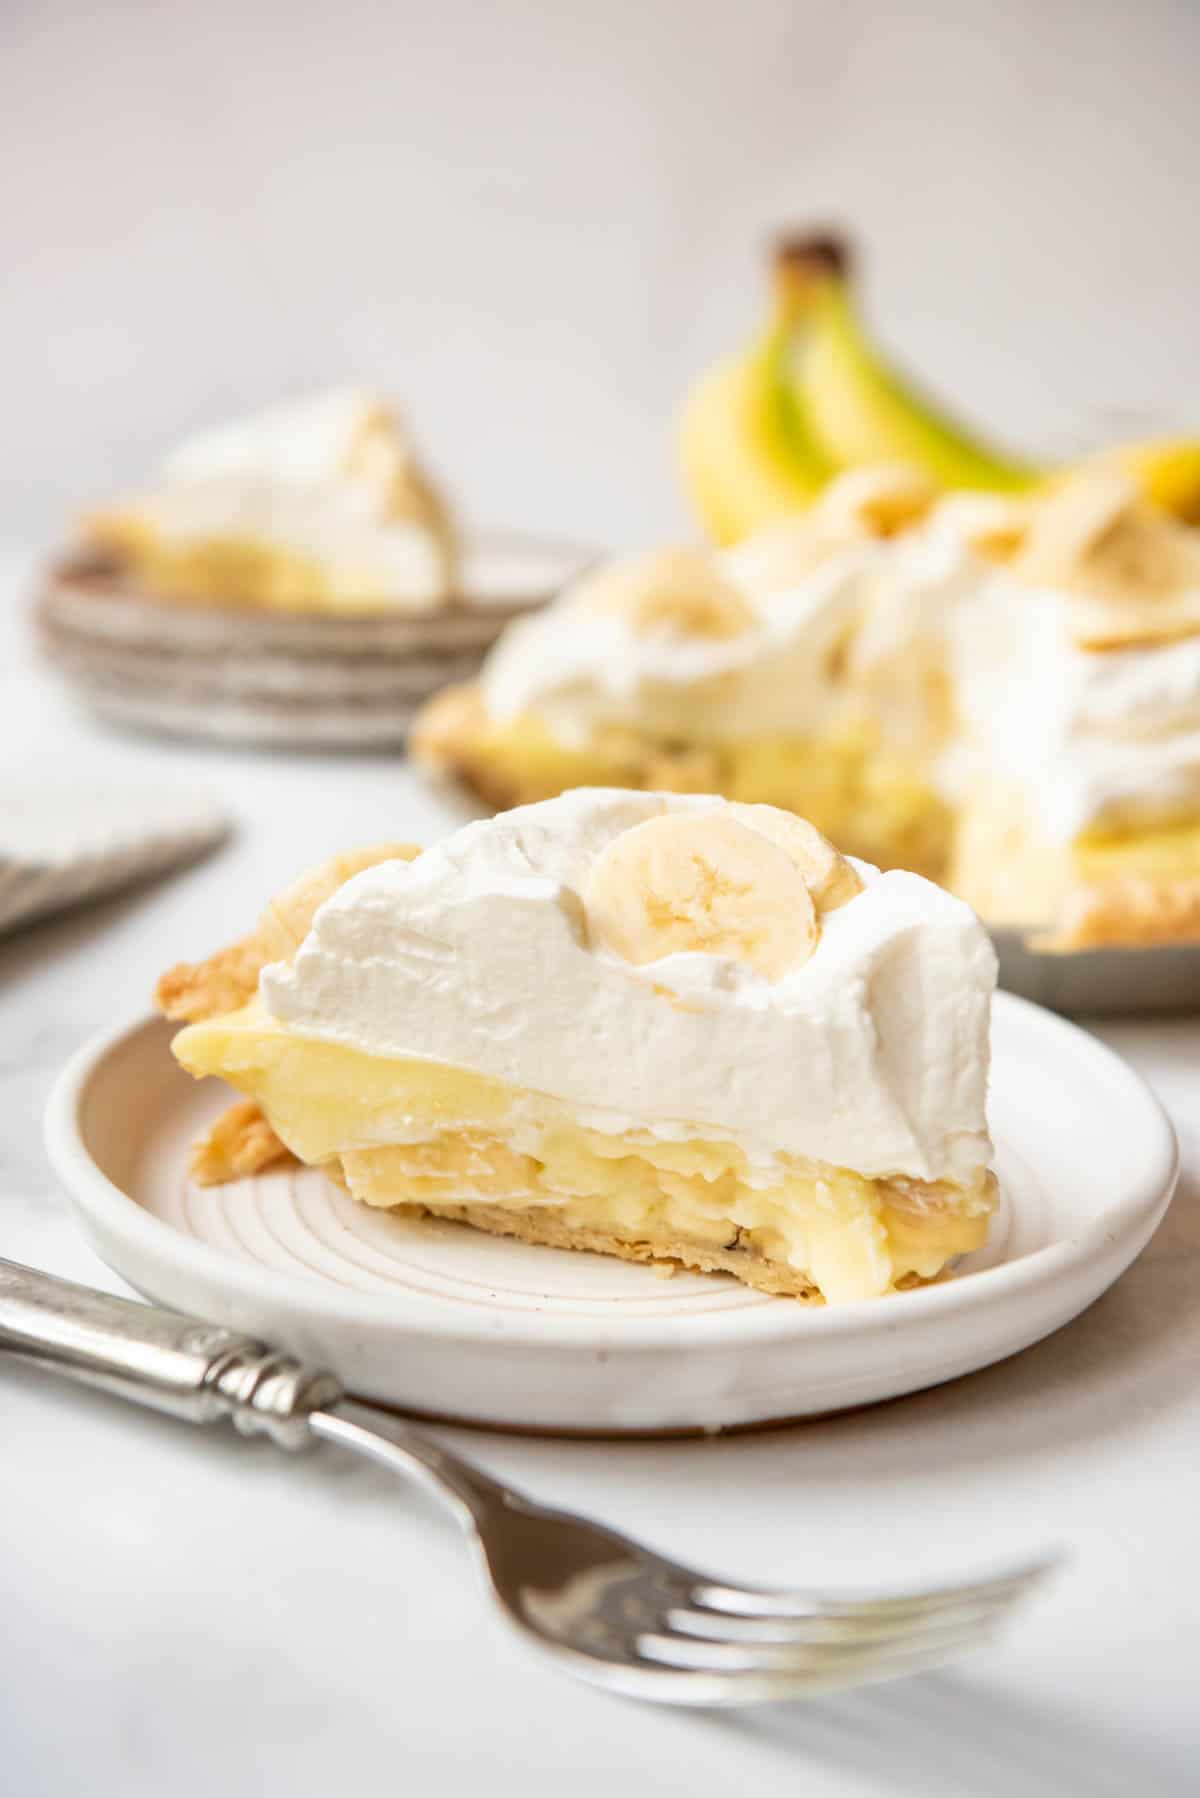 A slice of homemade banana cream pie on a plate.